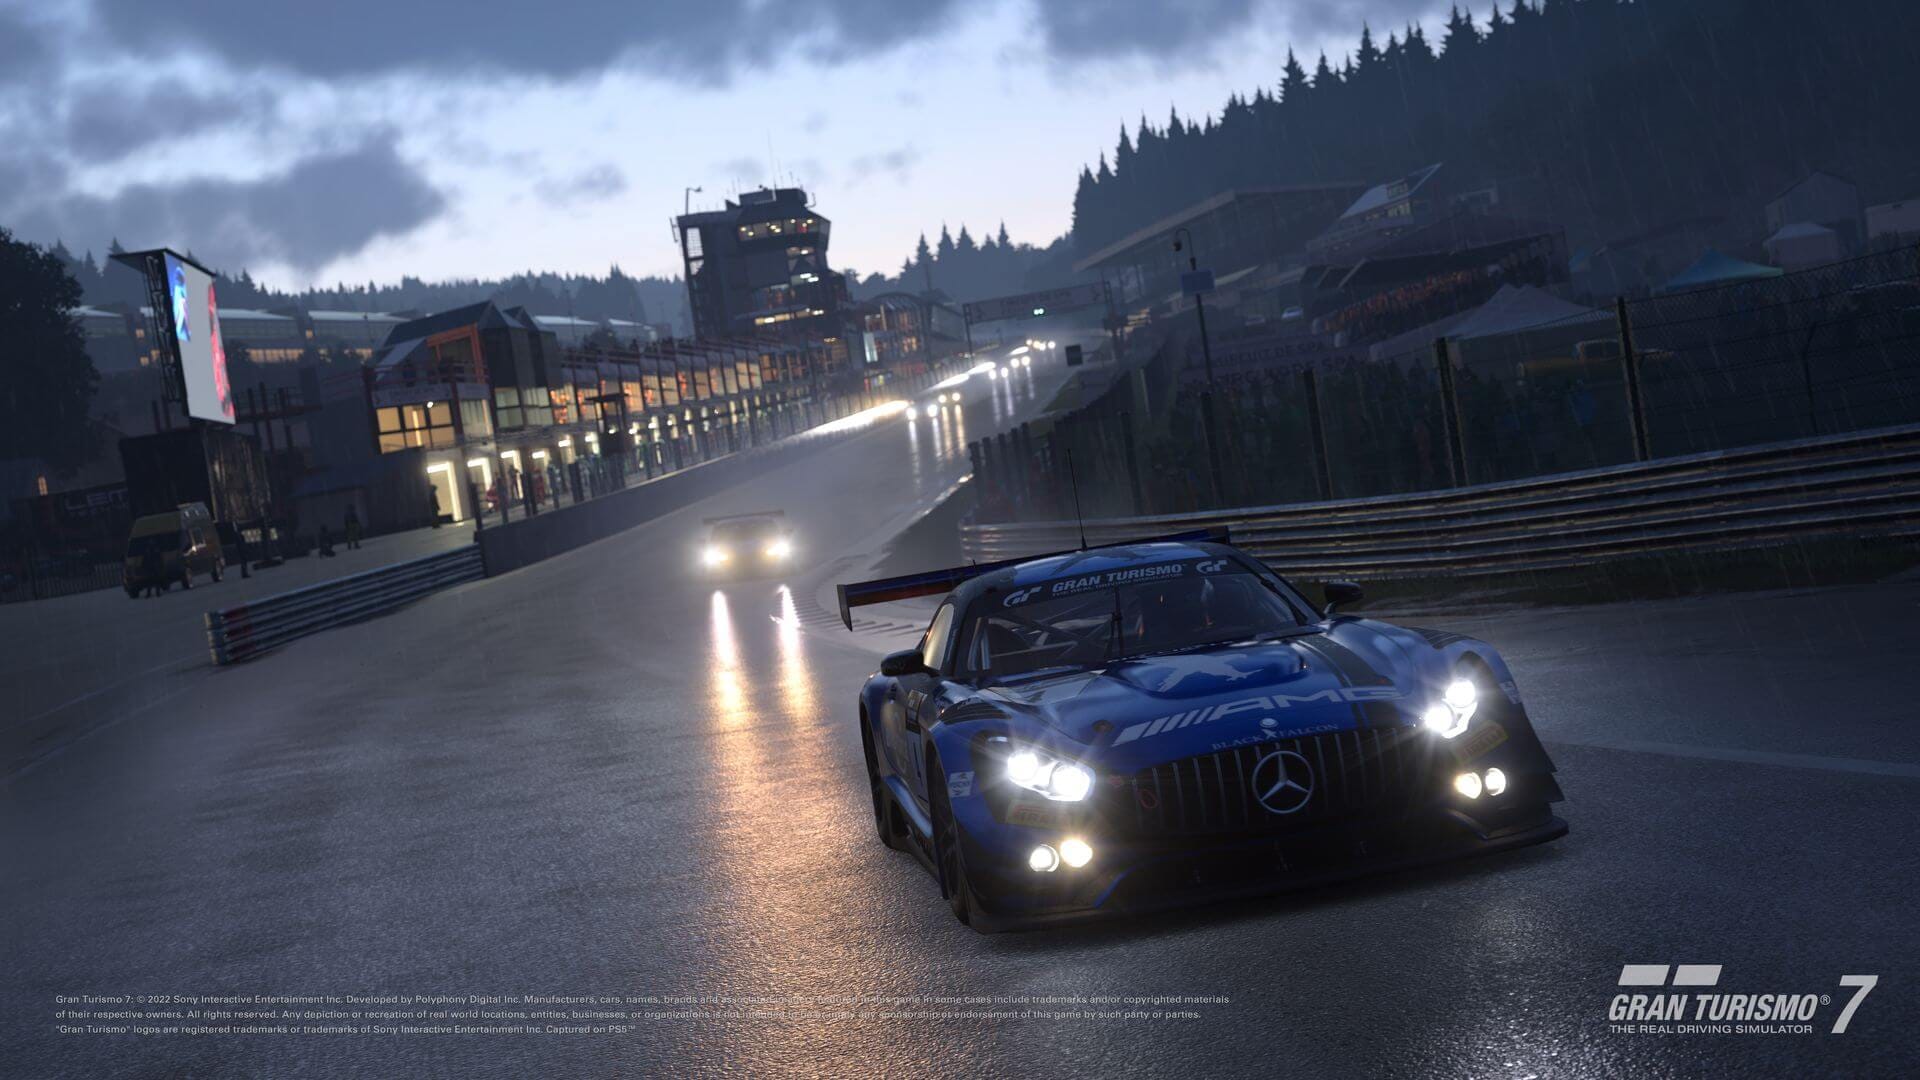 Gran Turismo 7 Update 1.40 Patch Notes: Spec II arrives